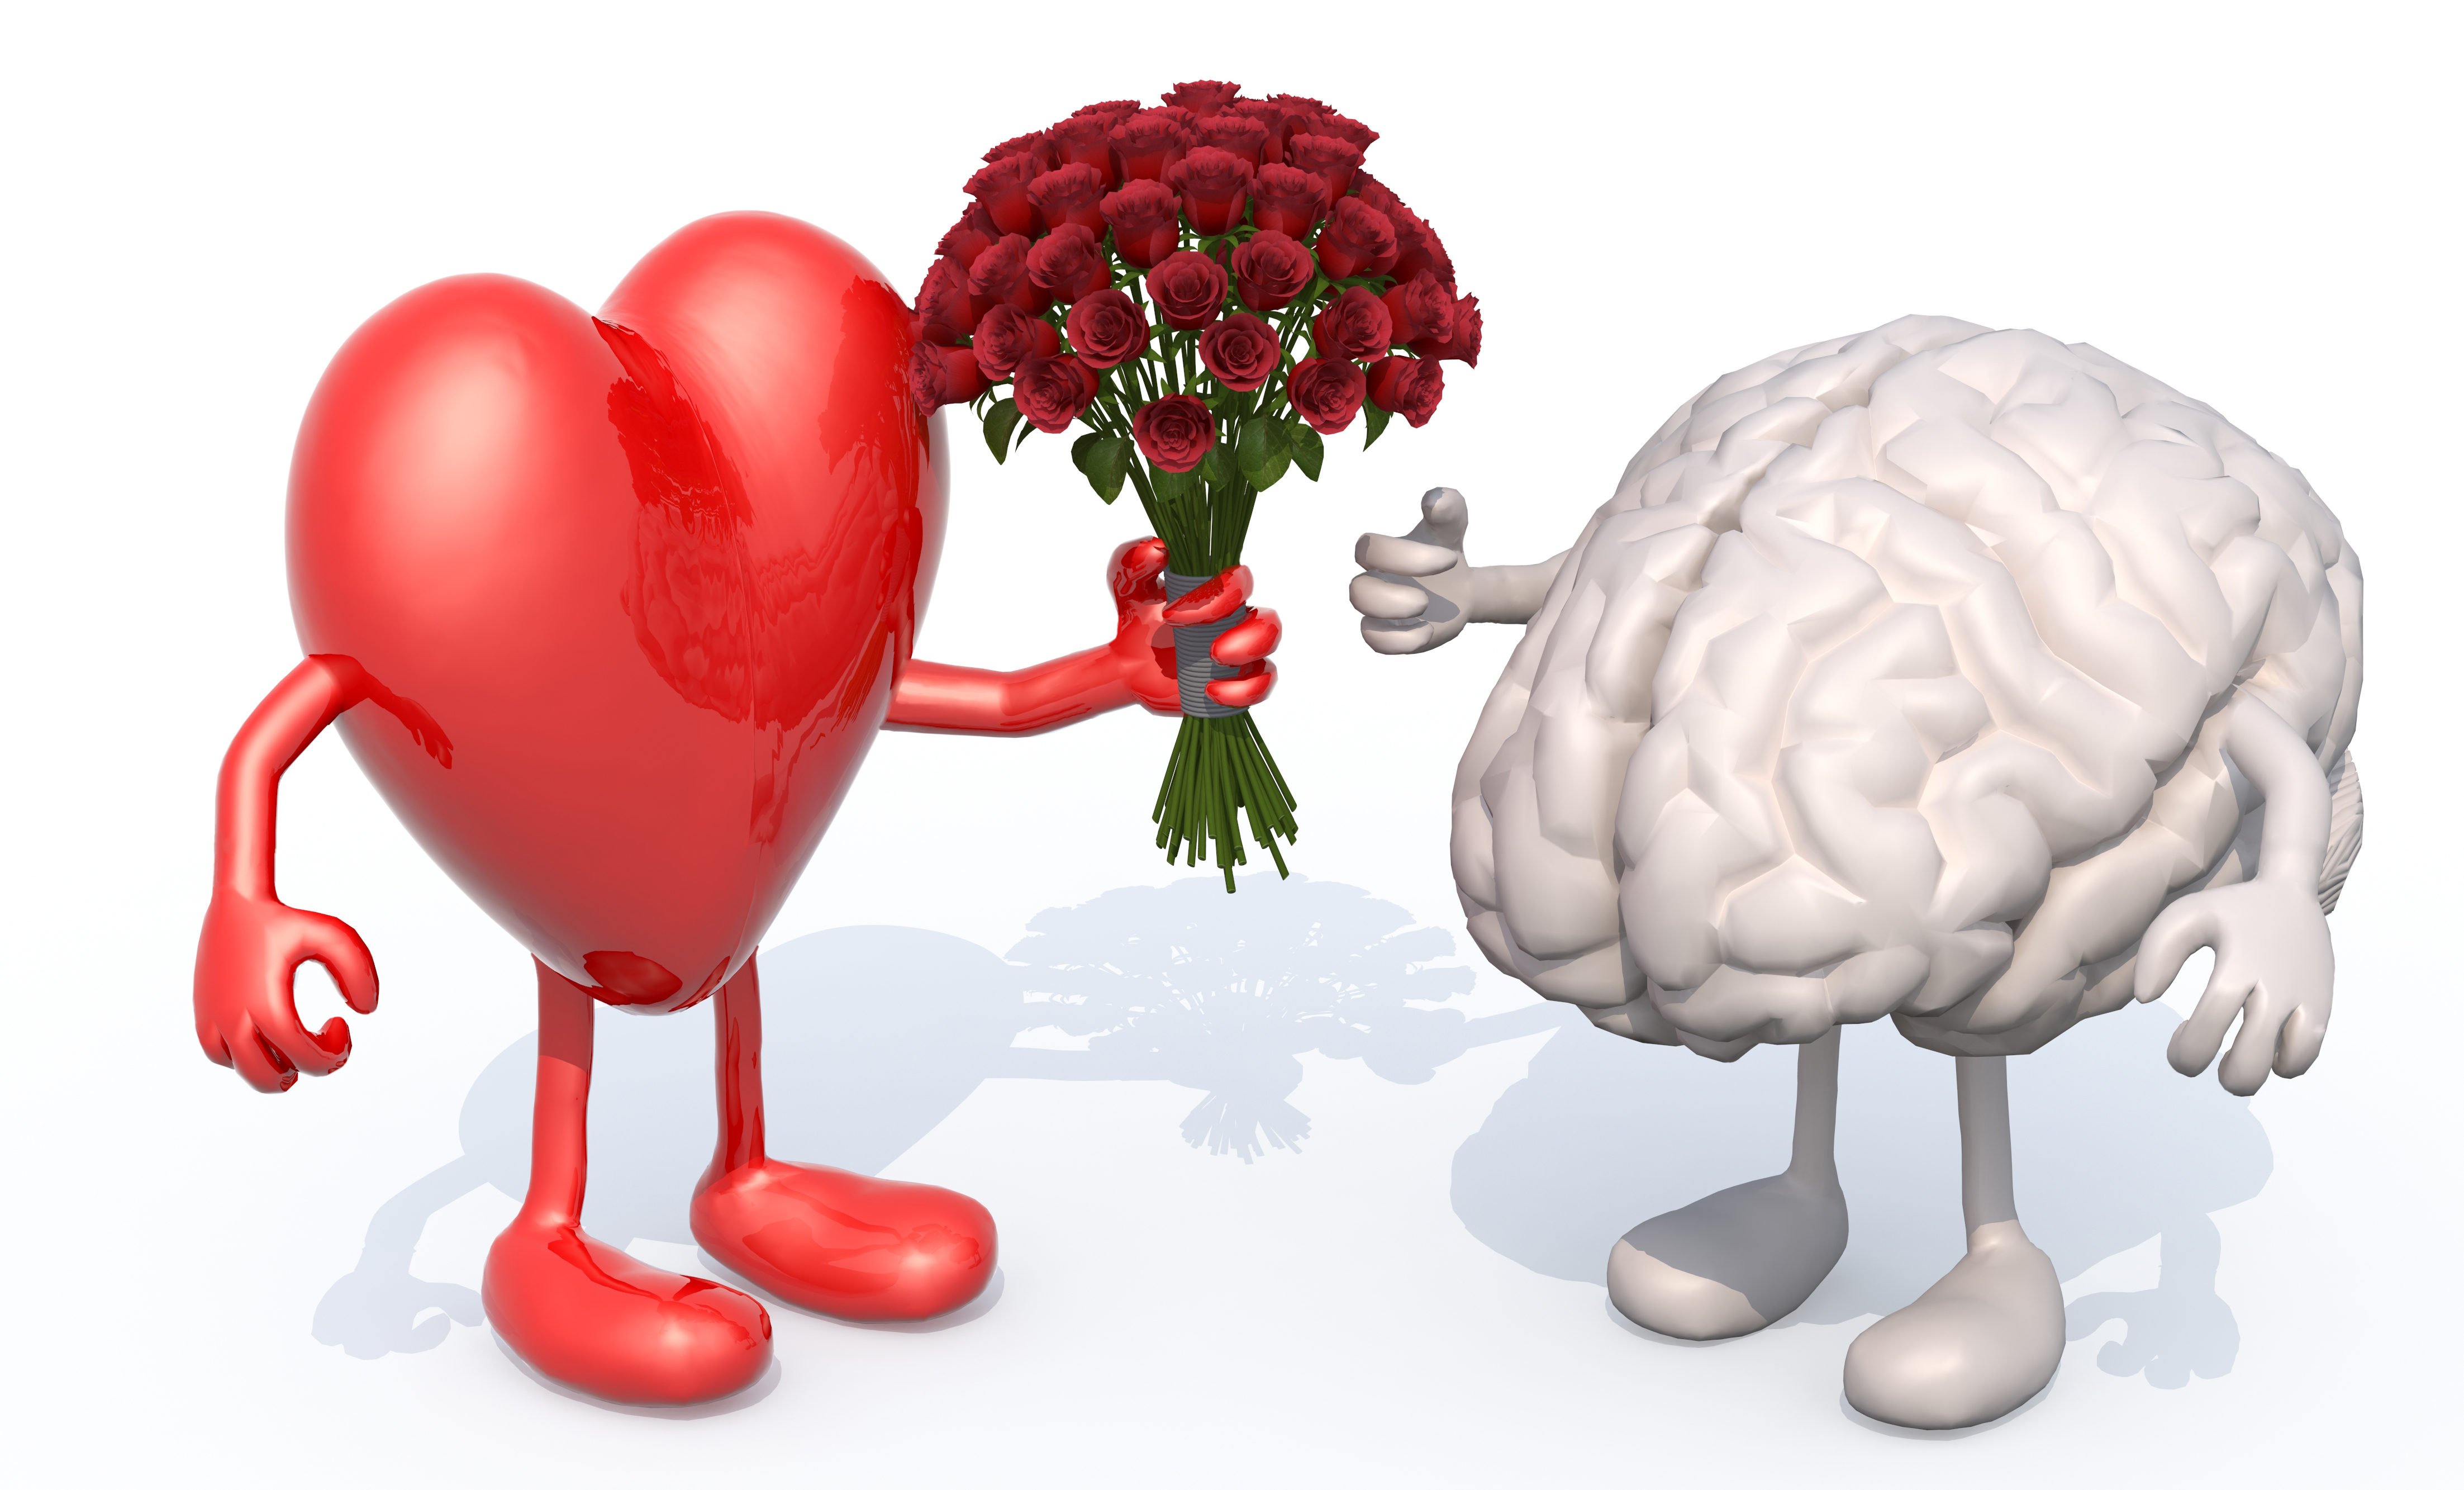 Heart and brain. Мозг и сердце. Сердце и разум. Ум и сердце. Мозг и сердце дружат.